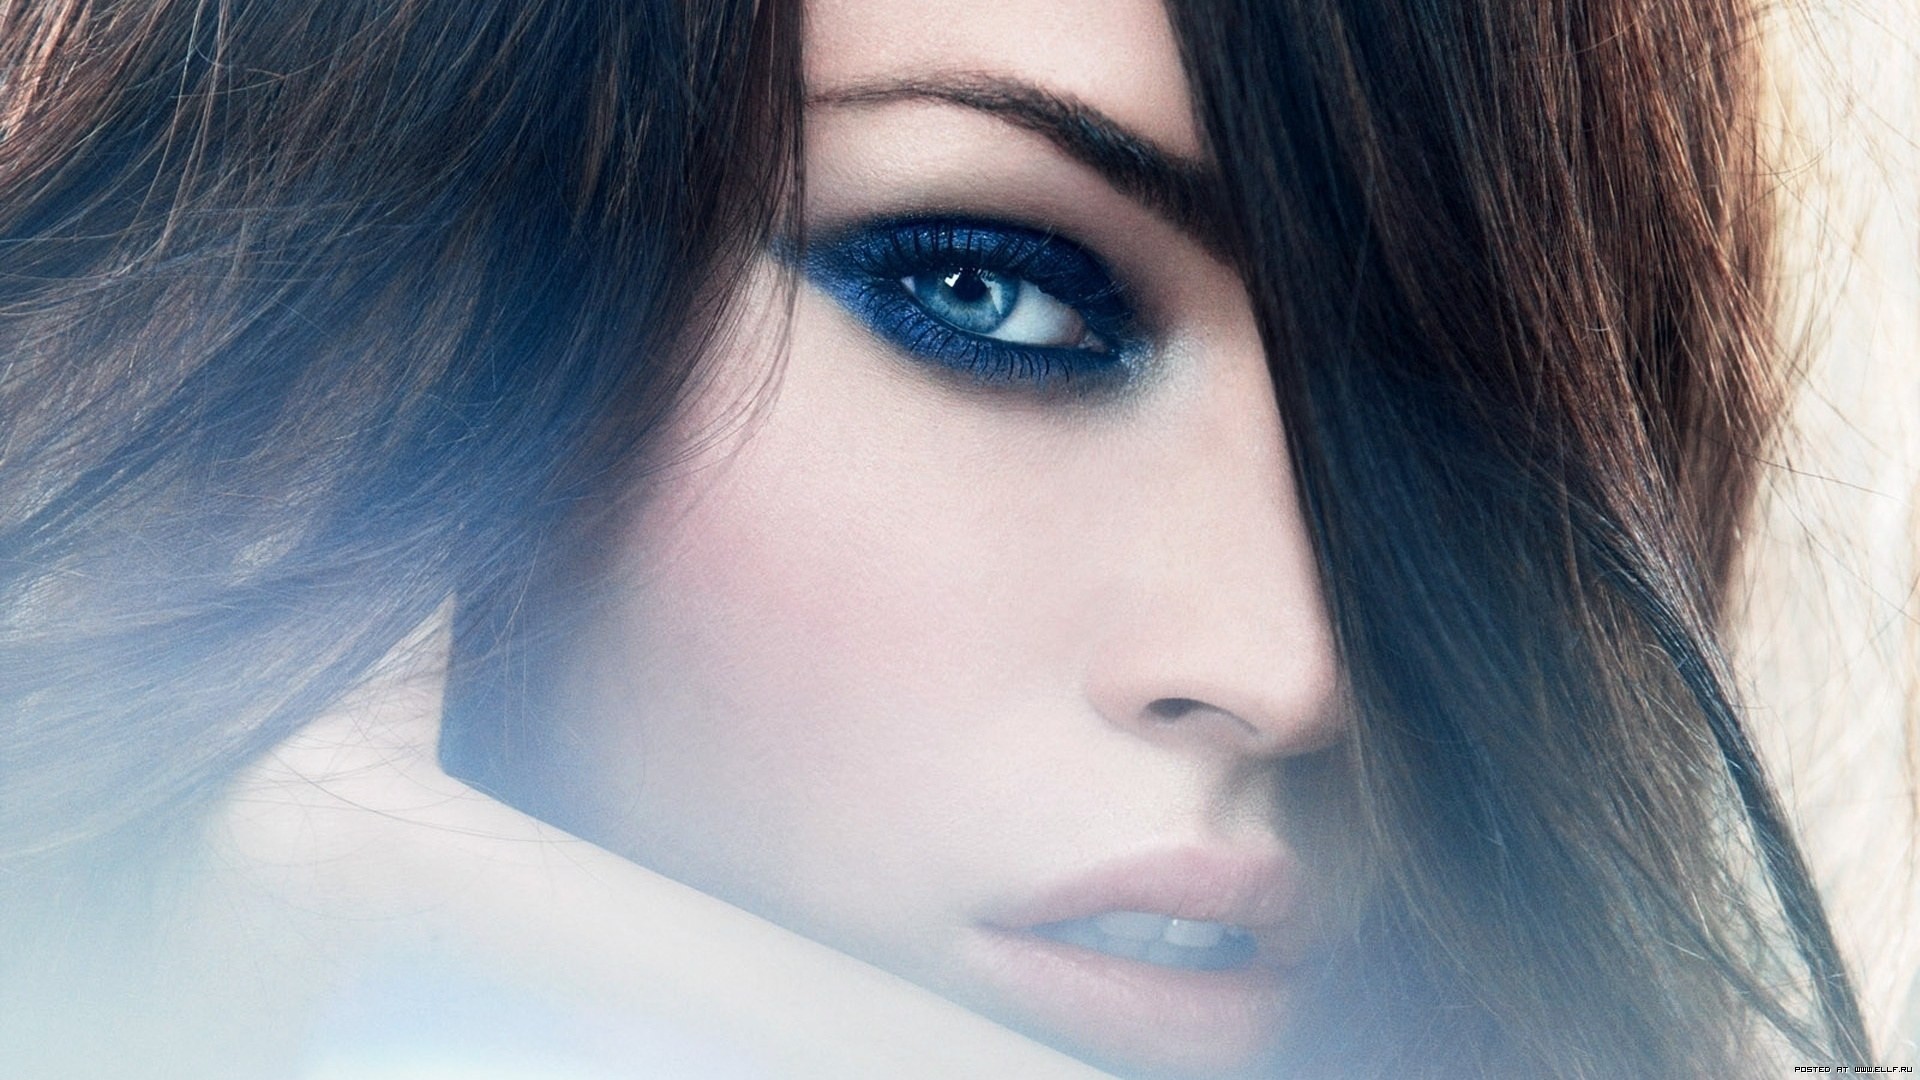 People 1920x1080 eyes blue eyes closeup sensual gaze women brunette face makeup Megan Fox actress celebrity looking at viewer